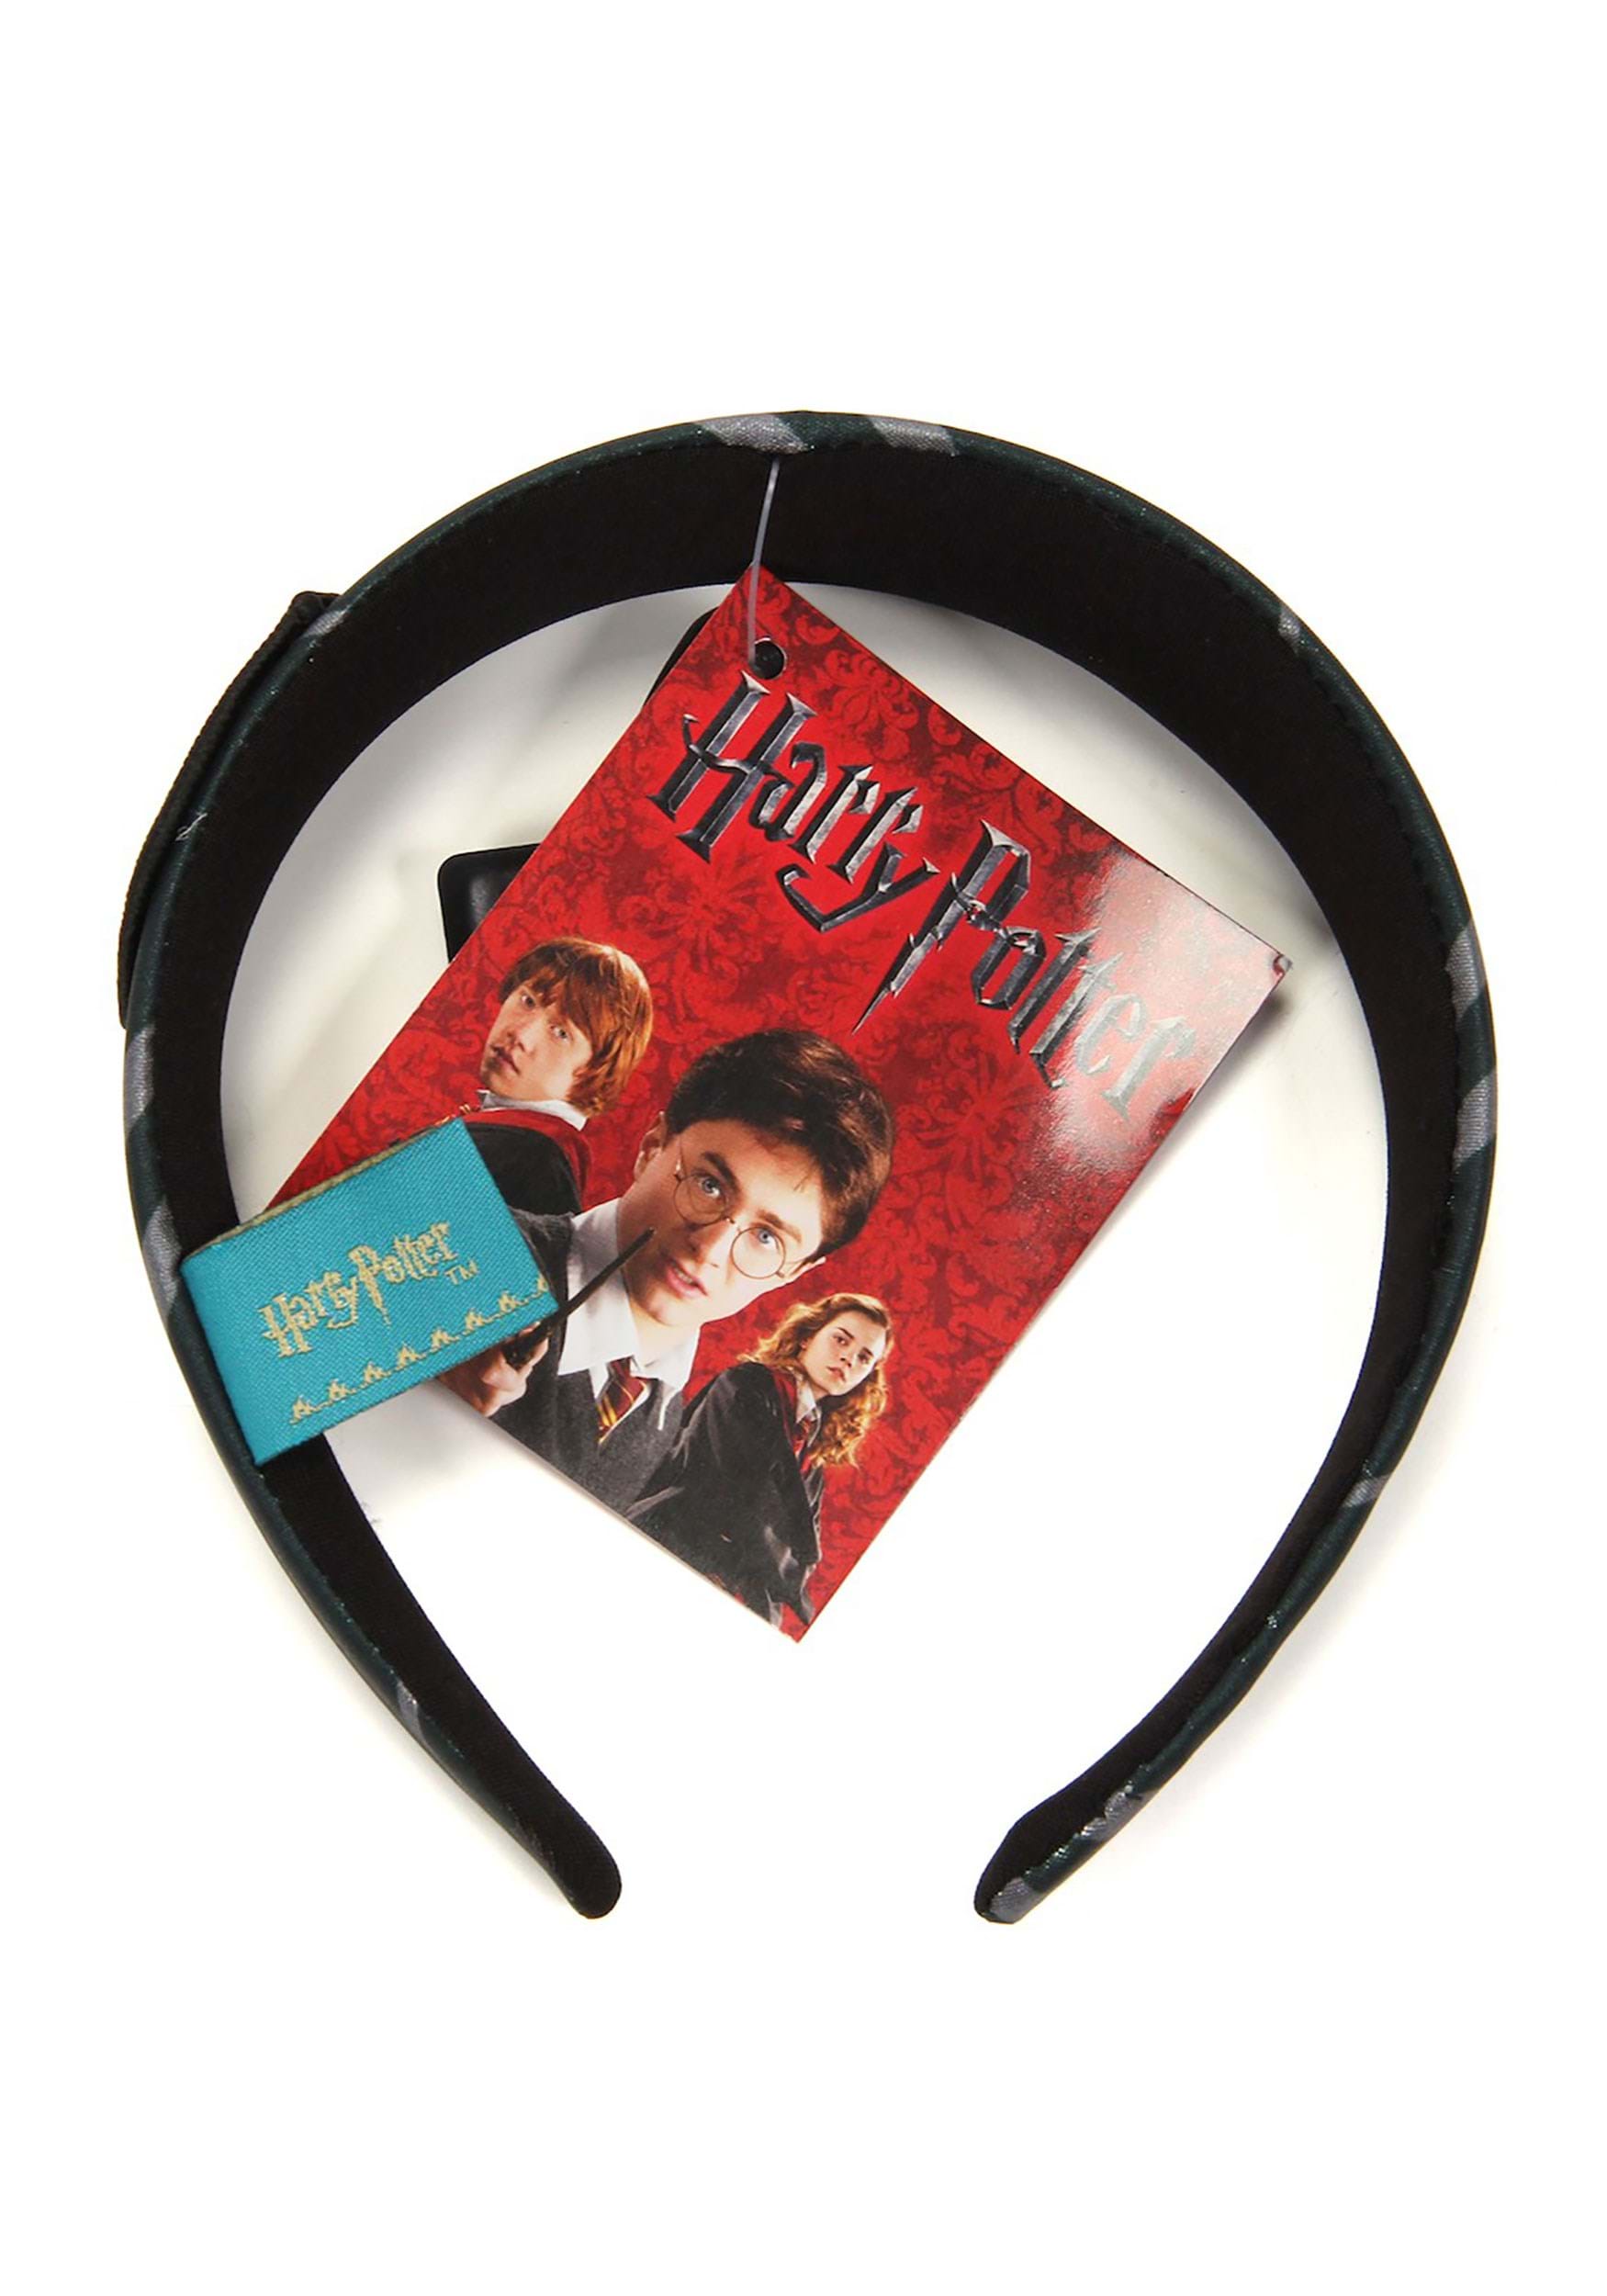 Harry Potter Slytherin Headband